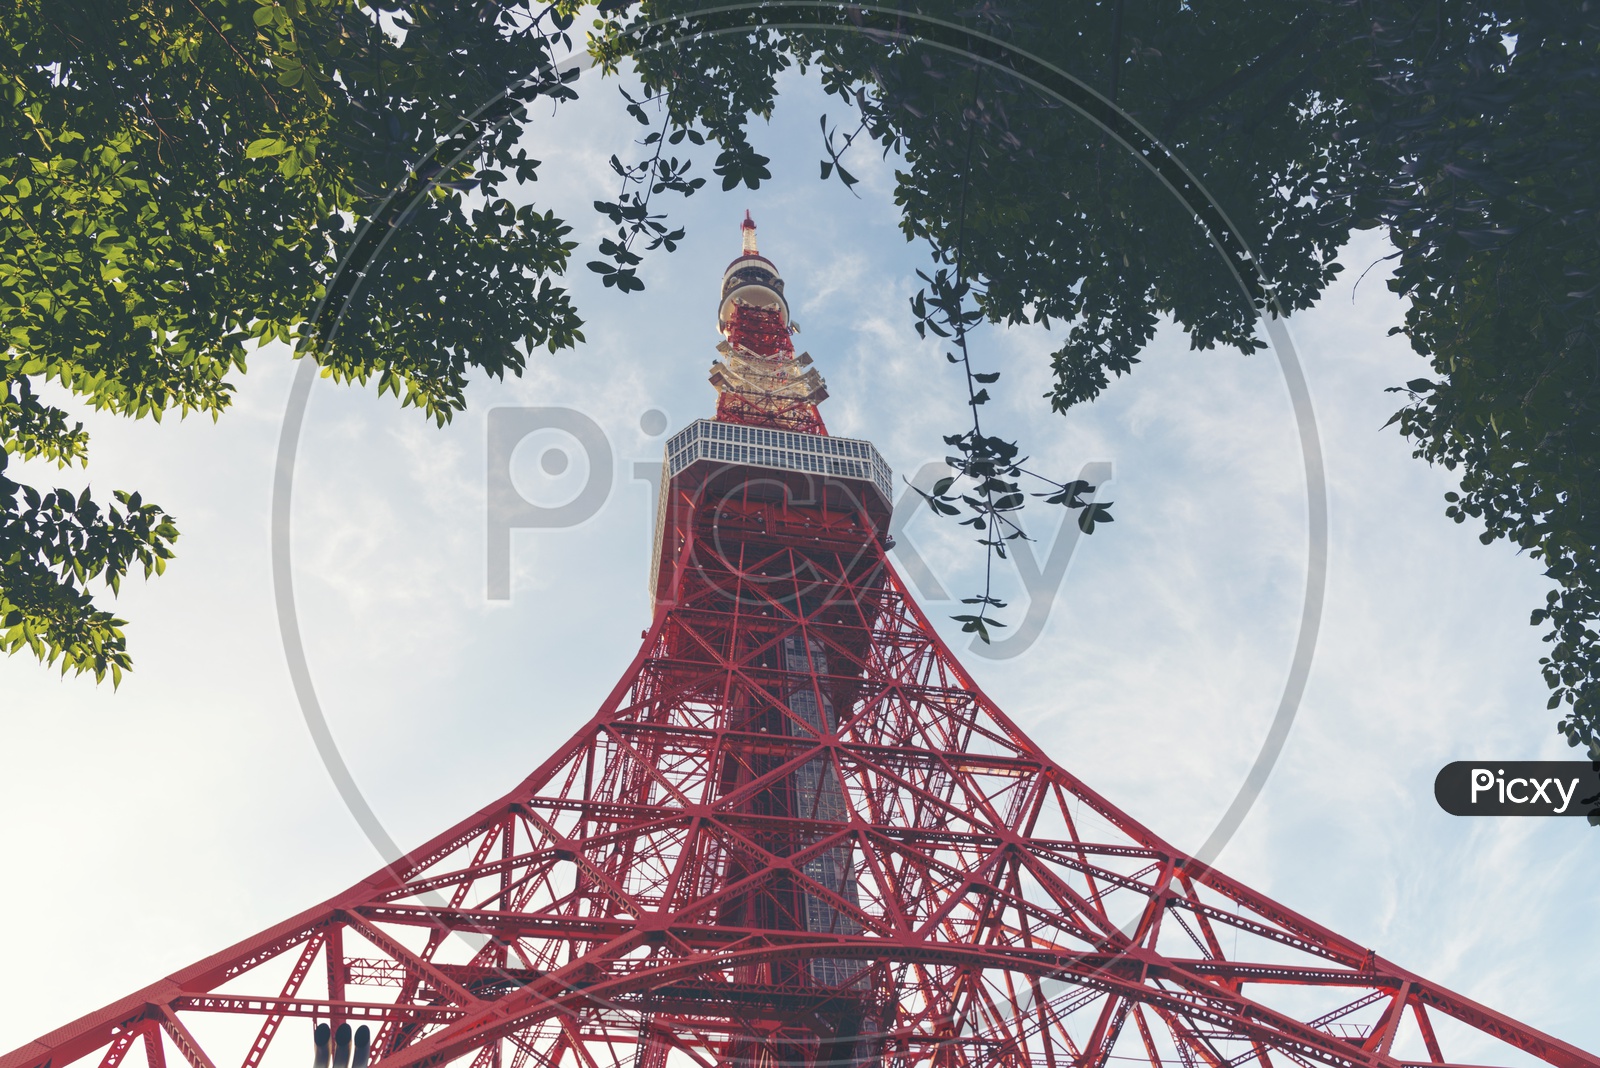 Tokyo Tower in the Shiba-koen district of Minato, Tokyo, Japan.